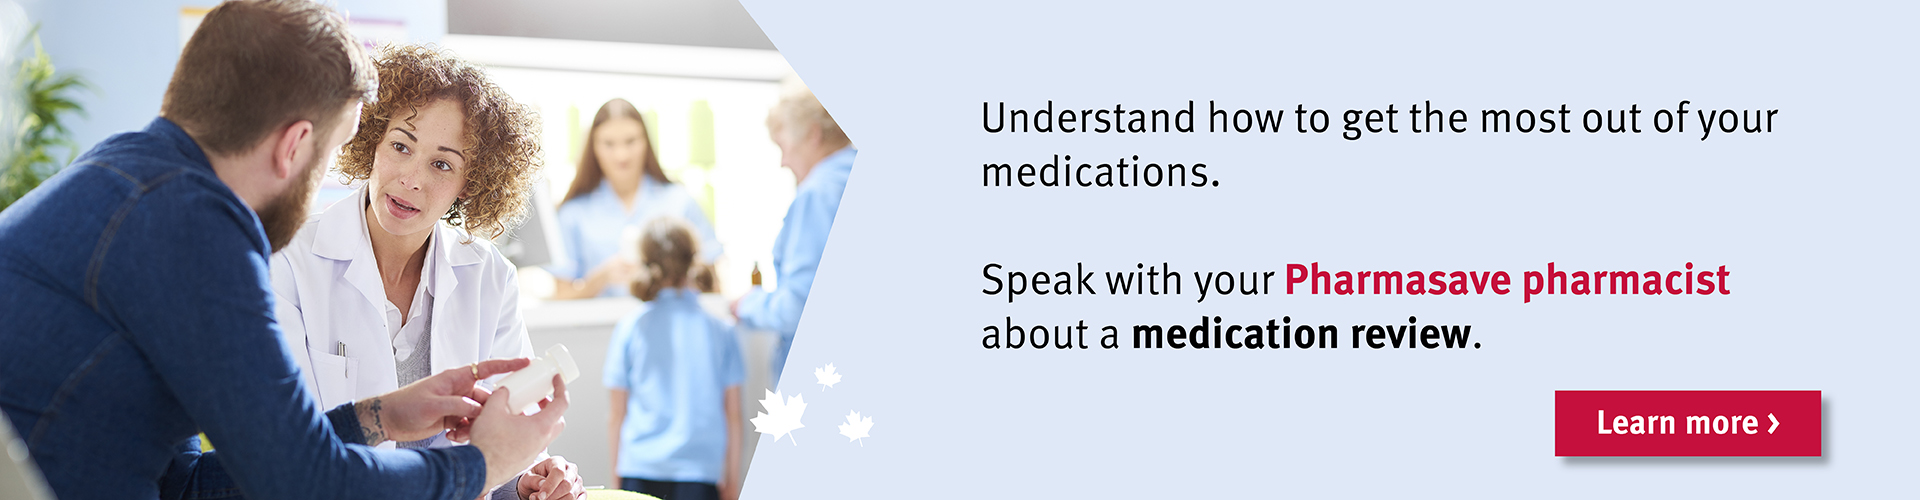 MedAlign medication review